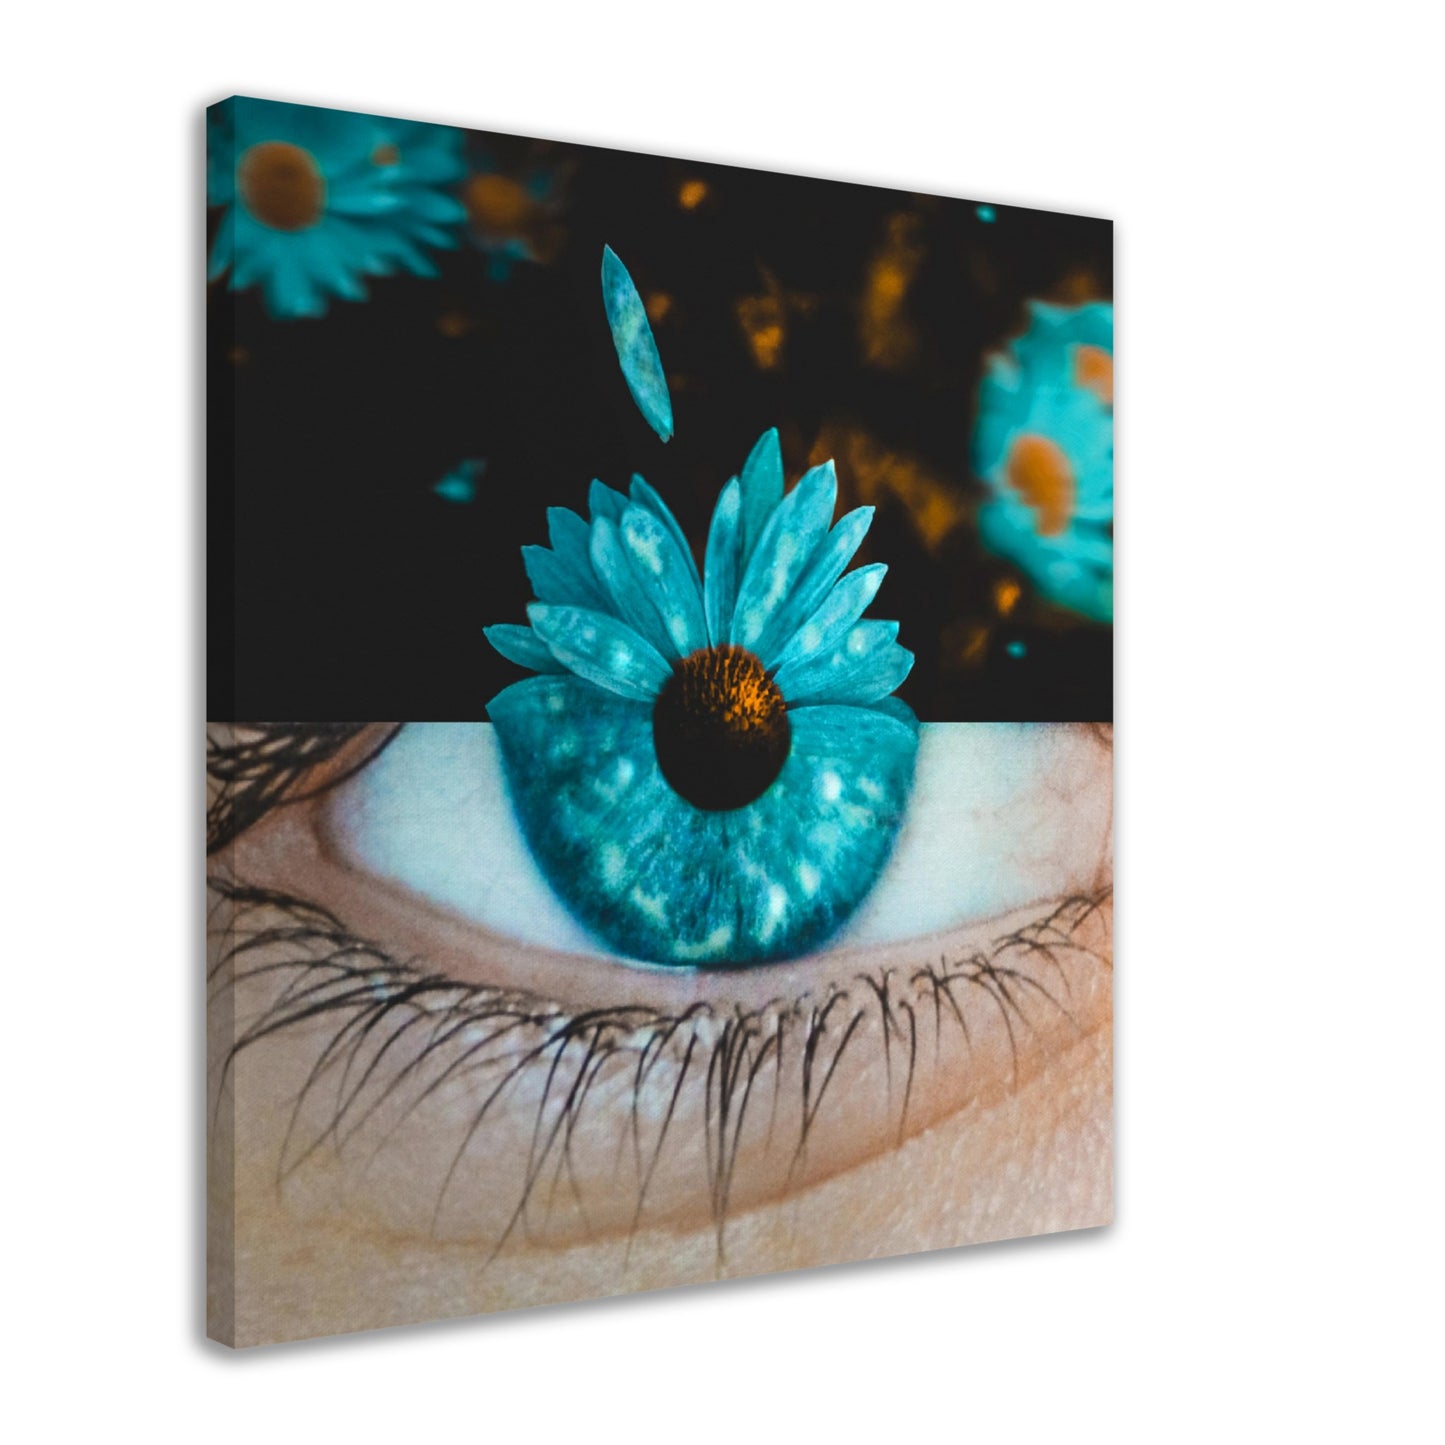 Blooming Vision - Canvas Print